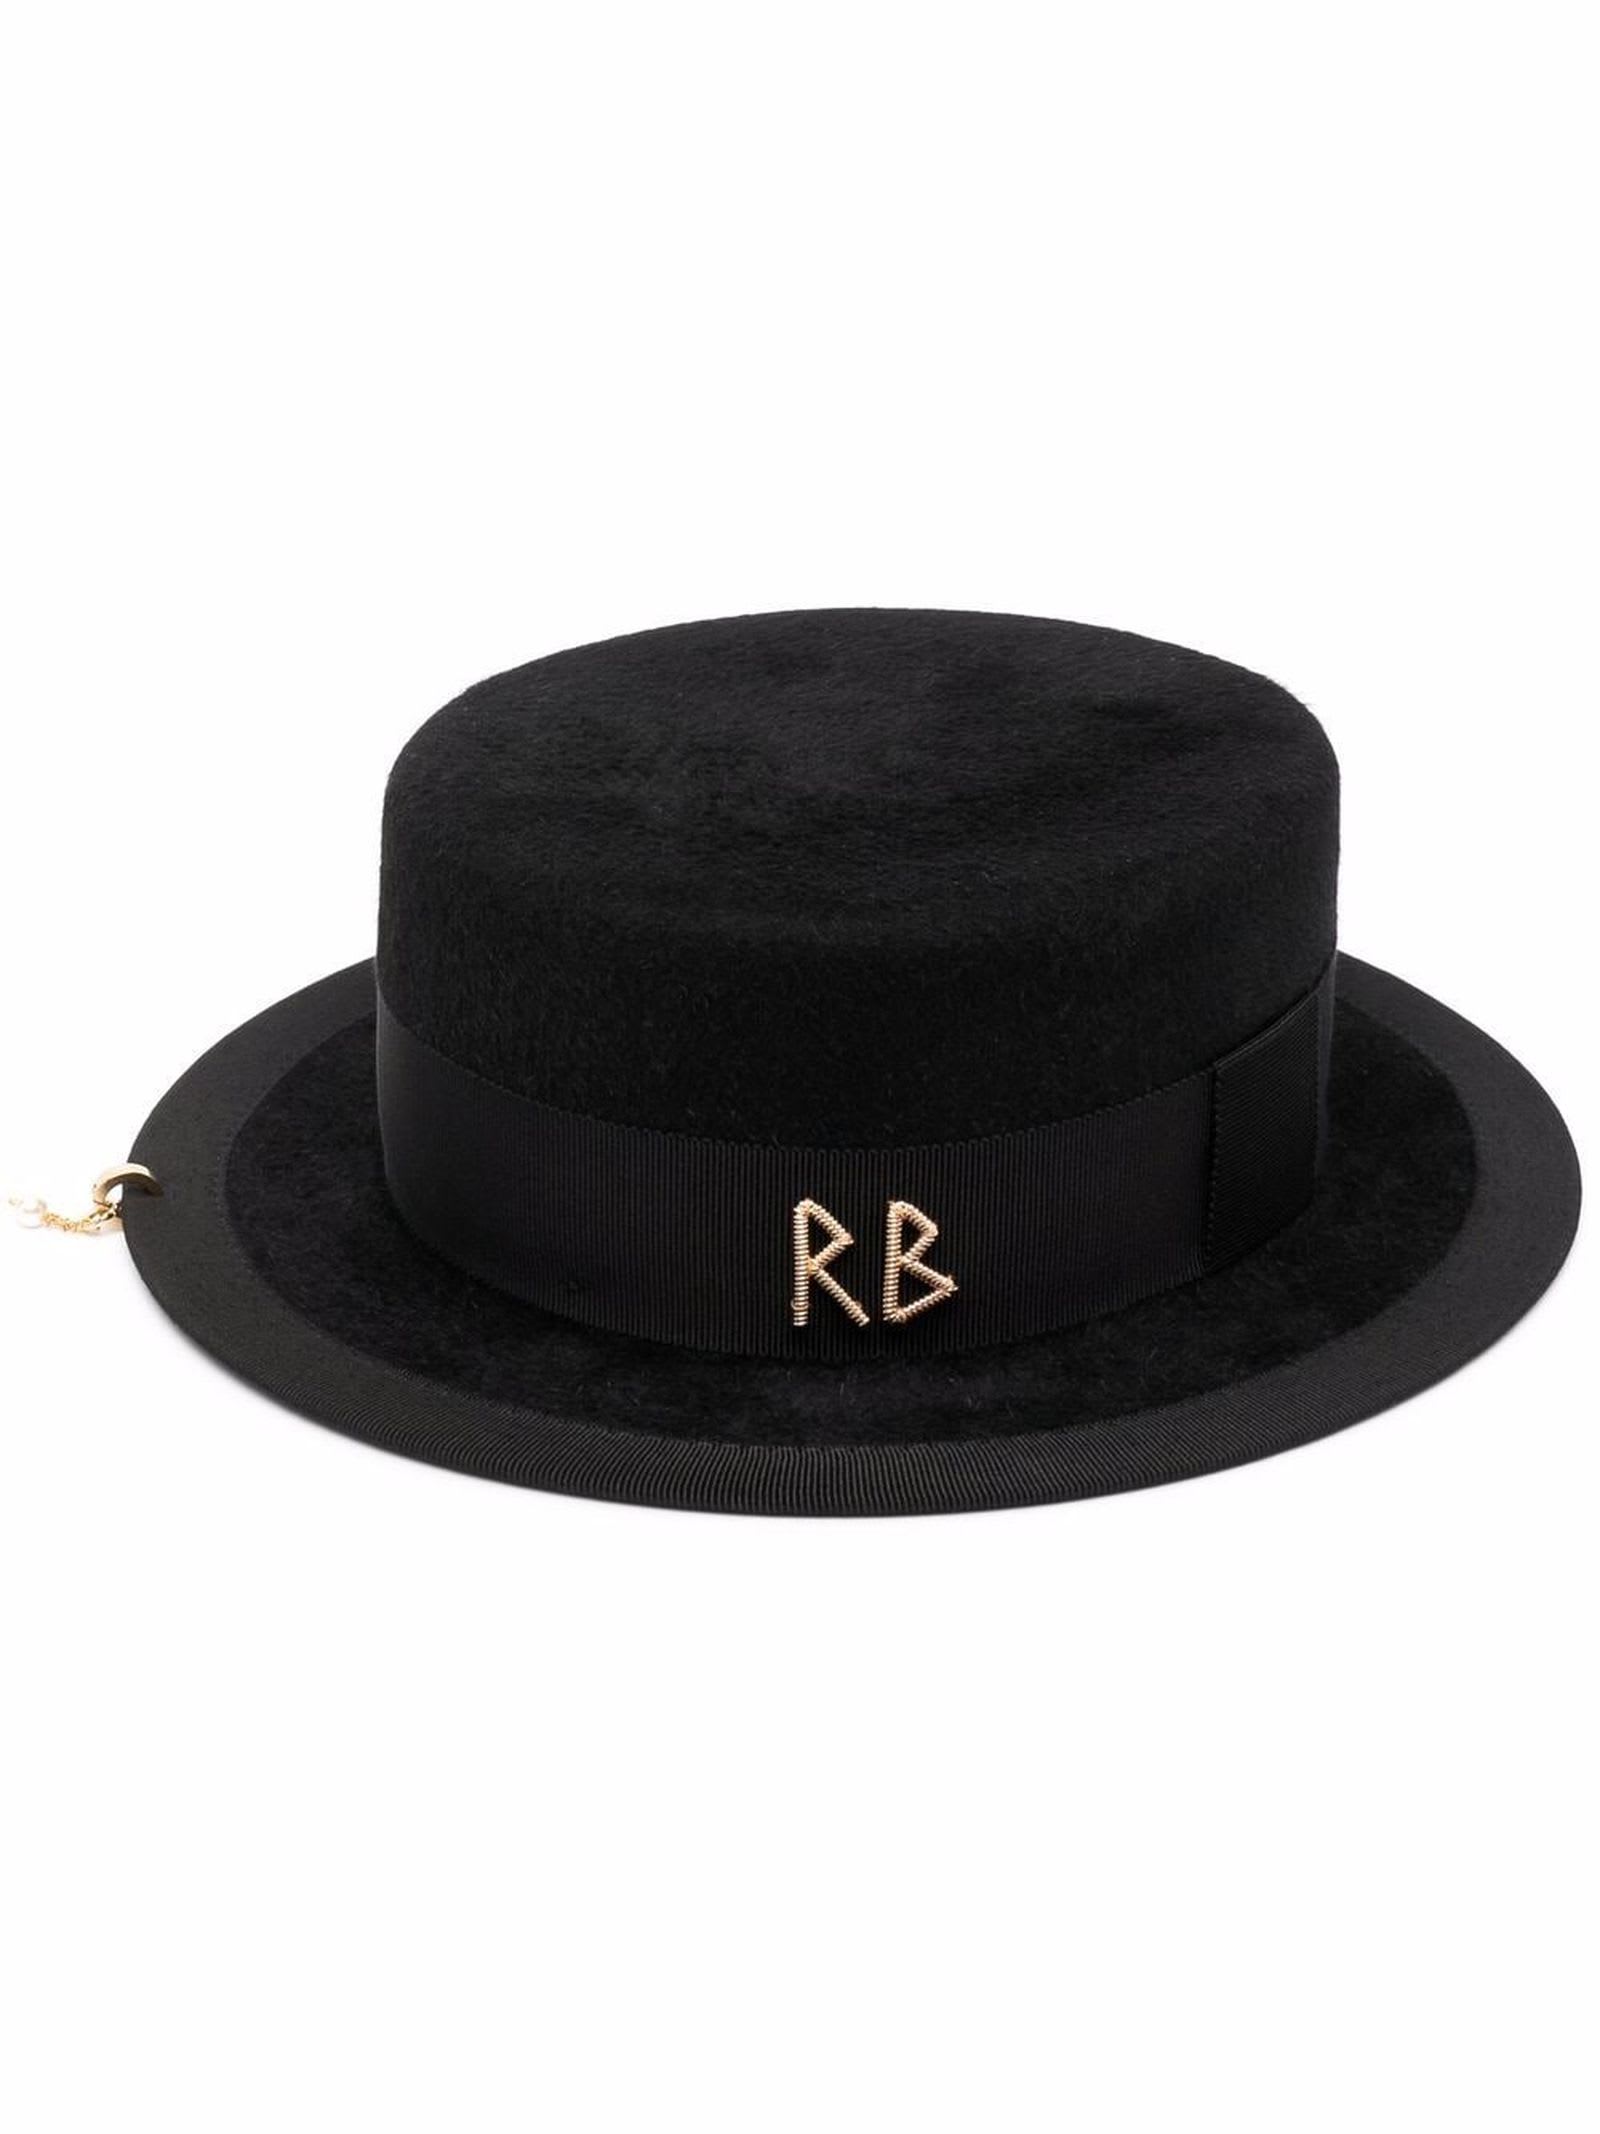 Ruslan Baginskiy Black Wool Felt And Cotton Canotier Felted Hat